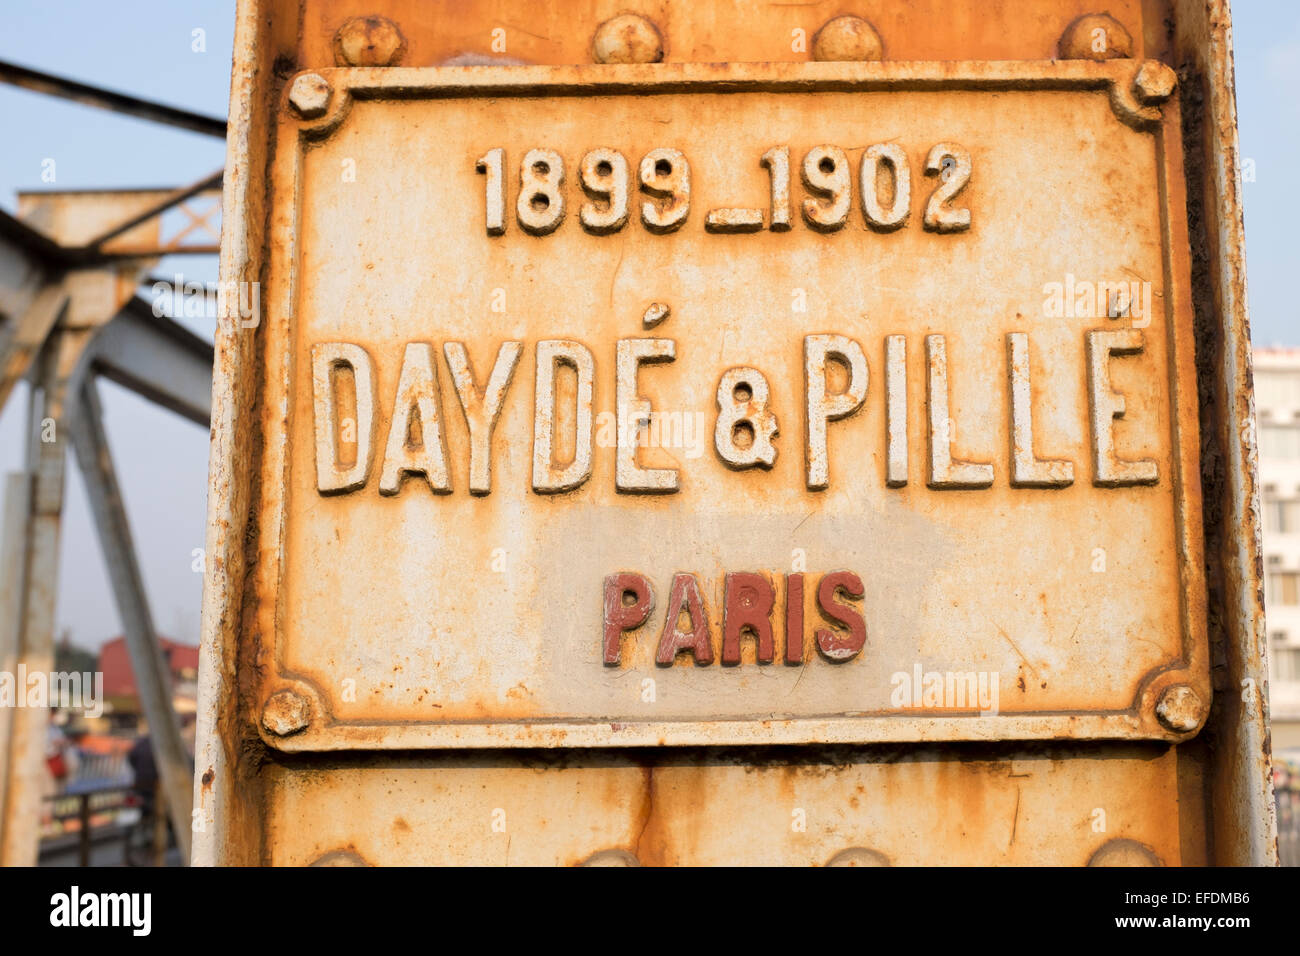 Dayde and Pille of Paris sign on Long Bien Railway Bridge Hanoi Vietnam Stock Photo